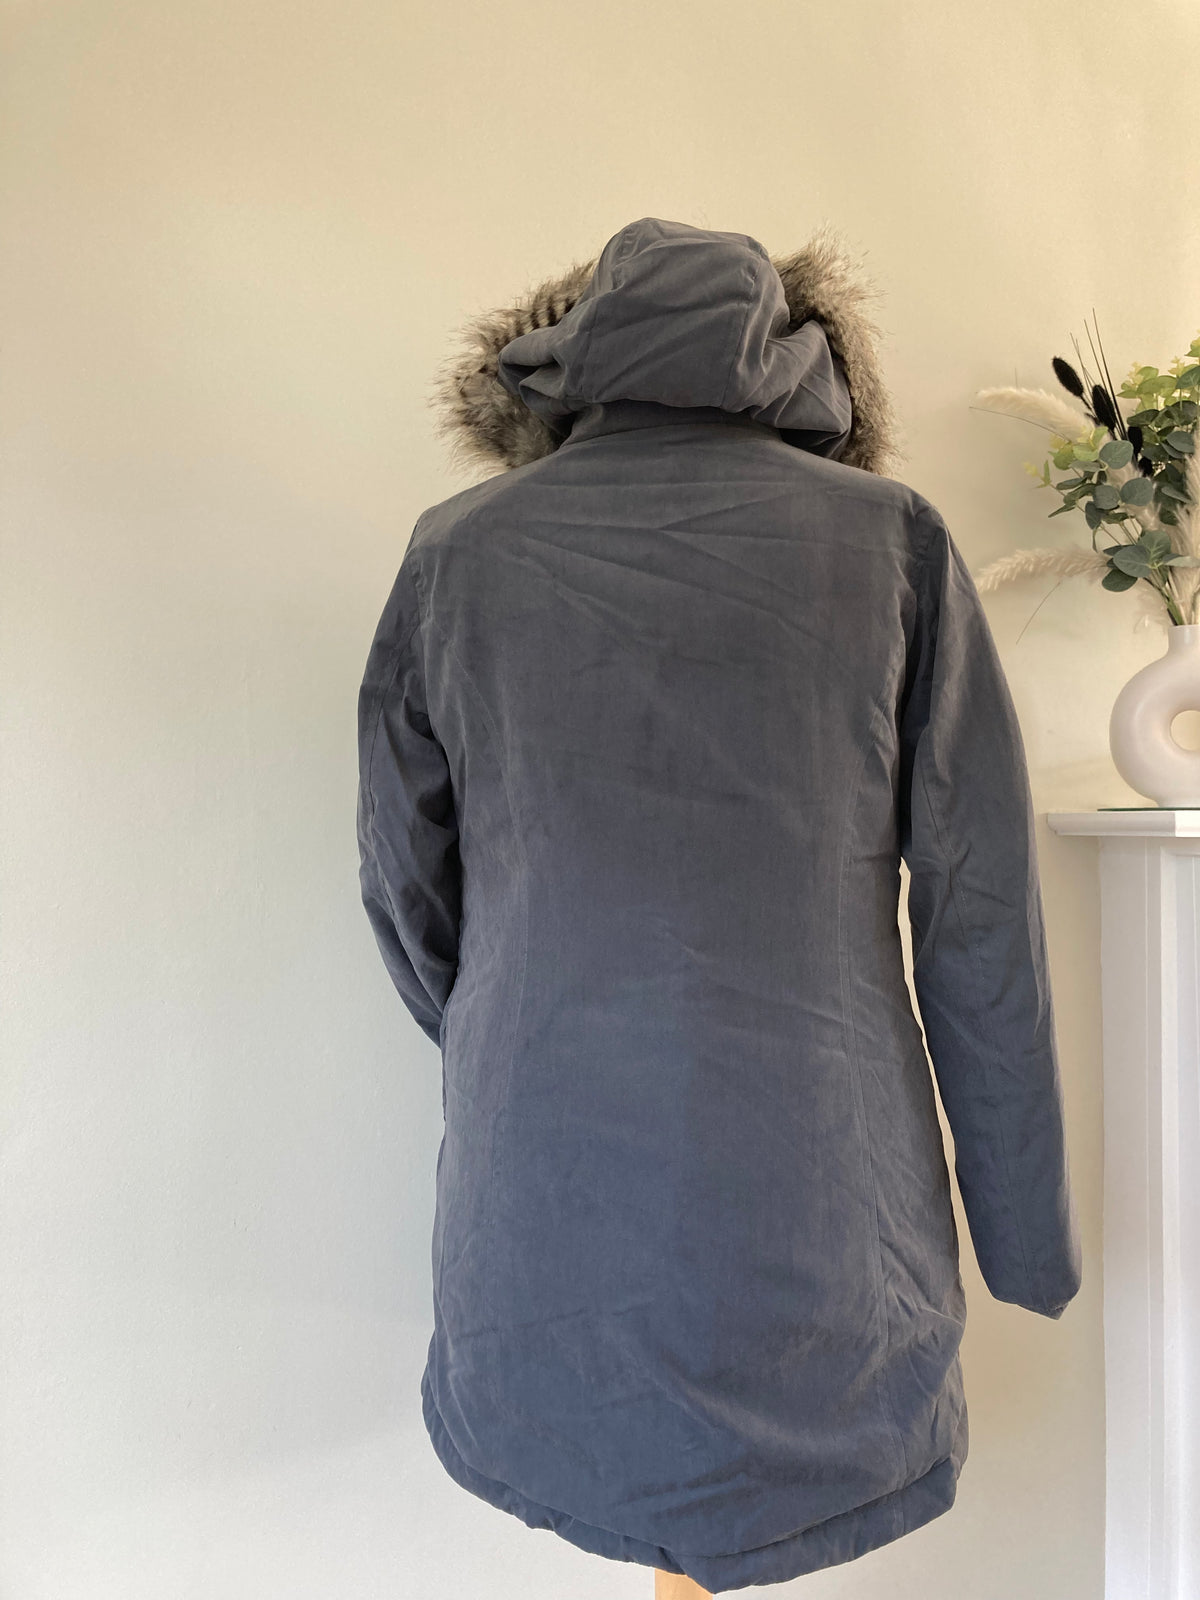 Dusty grey jacket by BONPRIX - size 14